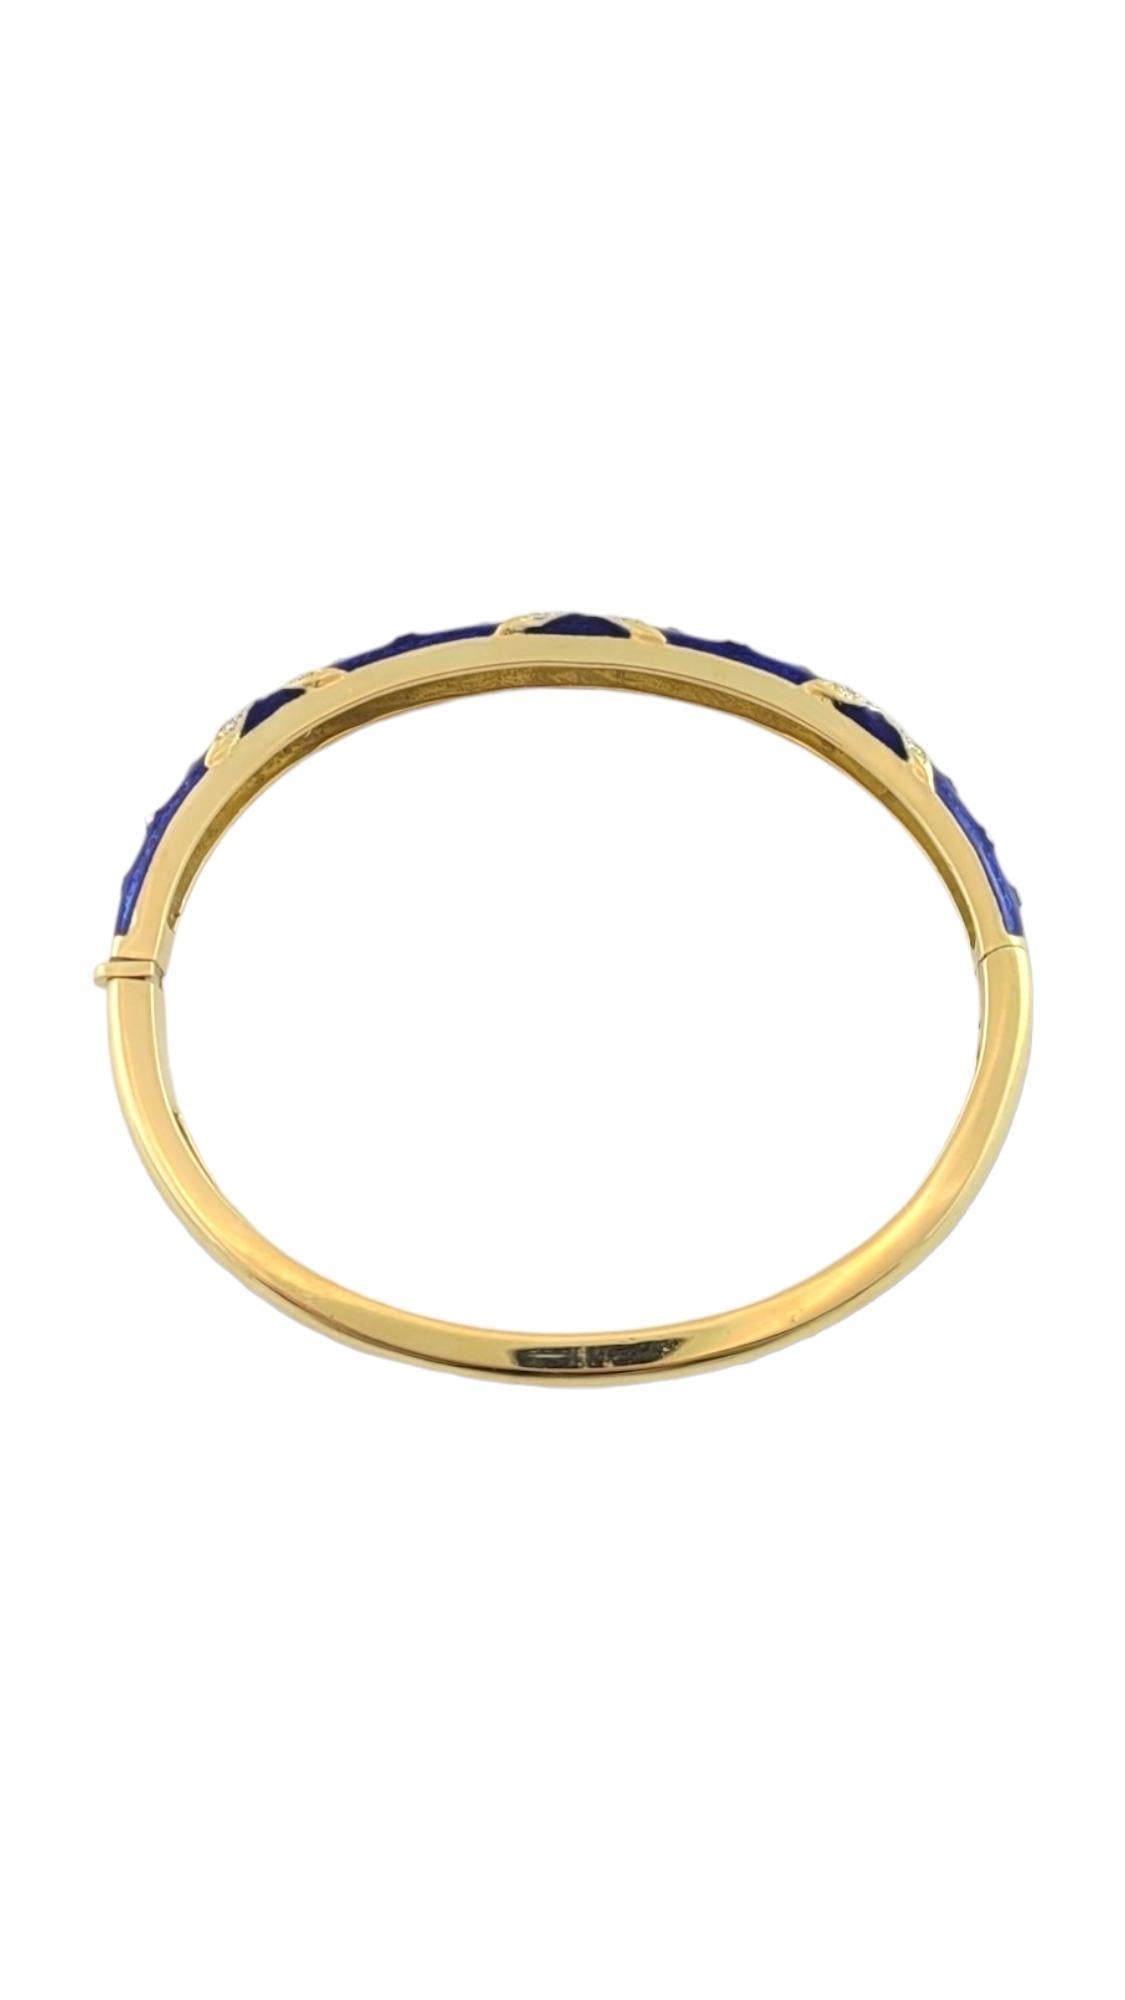 Hidalgo 18K Yellow Gold Blue Enamel Diamond X Hinged Bangle Bracelet #16086 For Sale 1